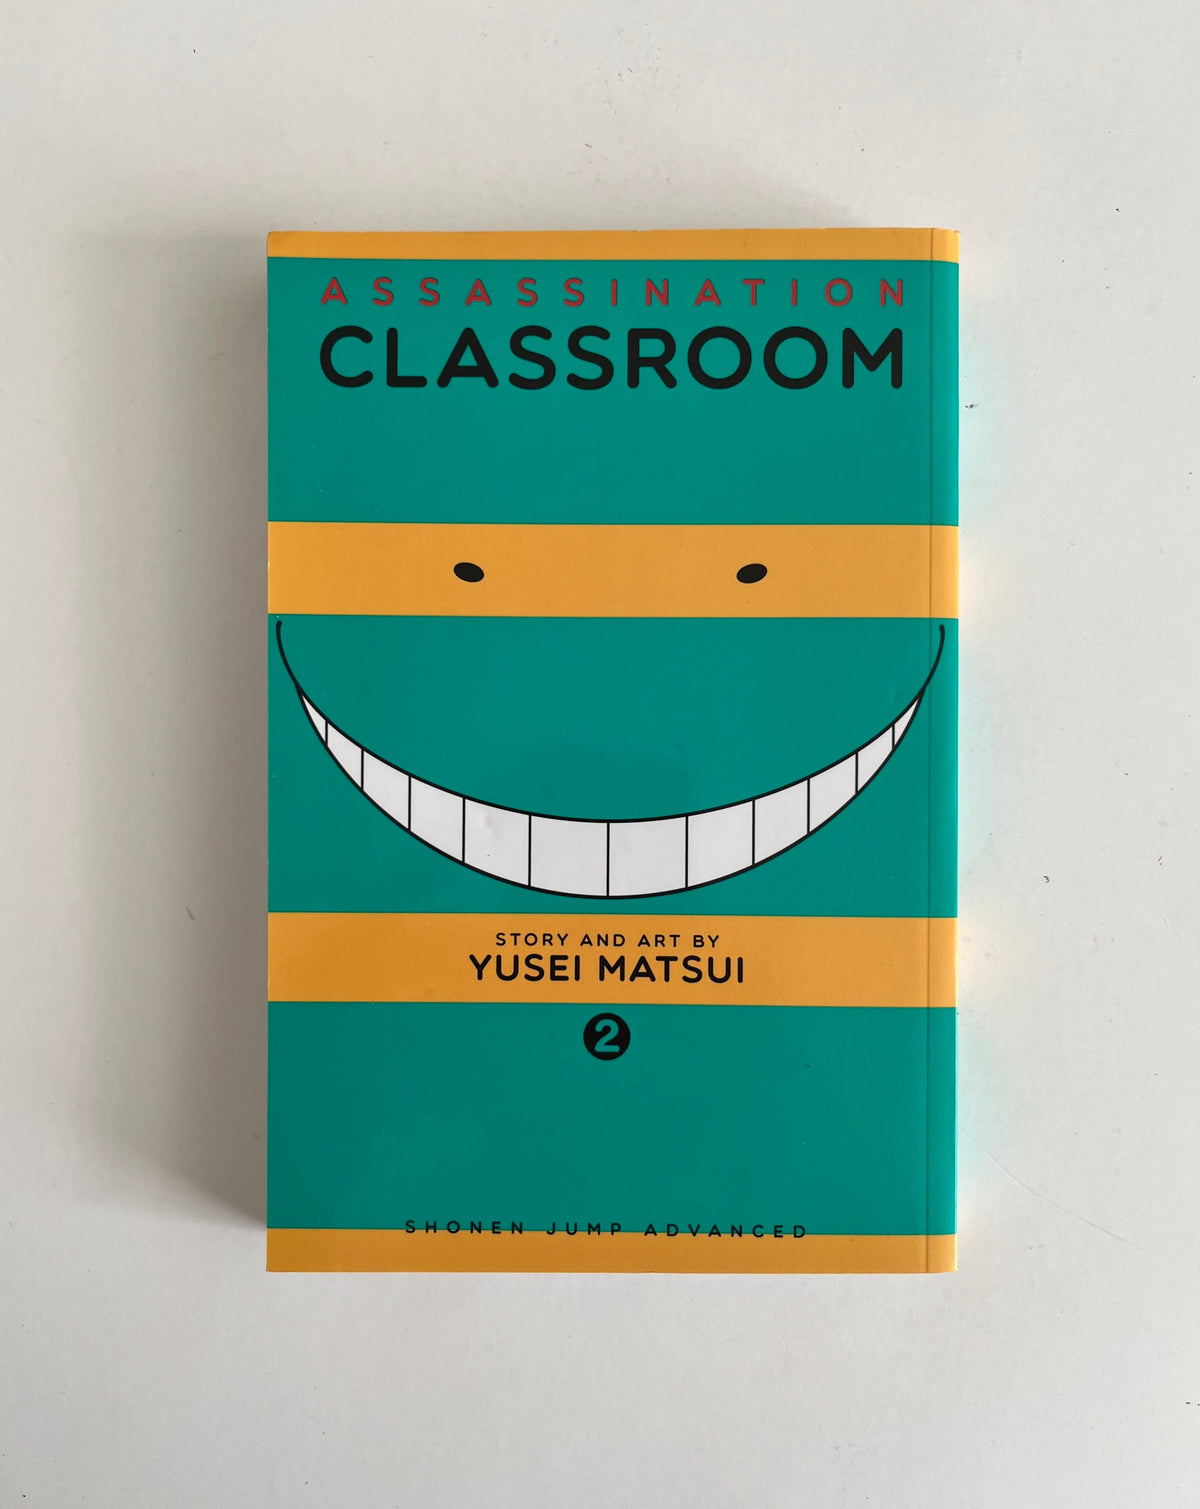 Assassination Classroom 2 by Yusei Matsui